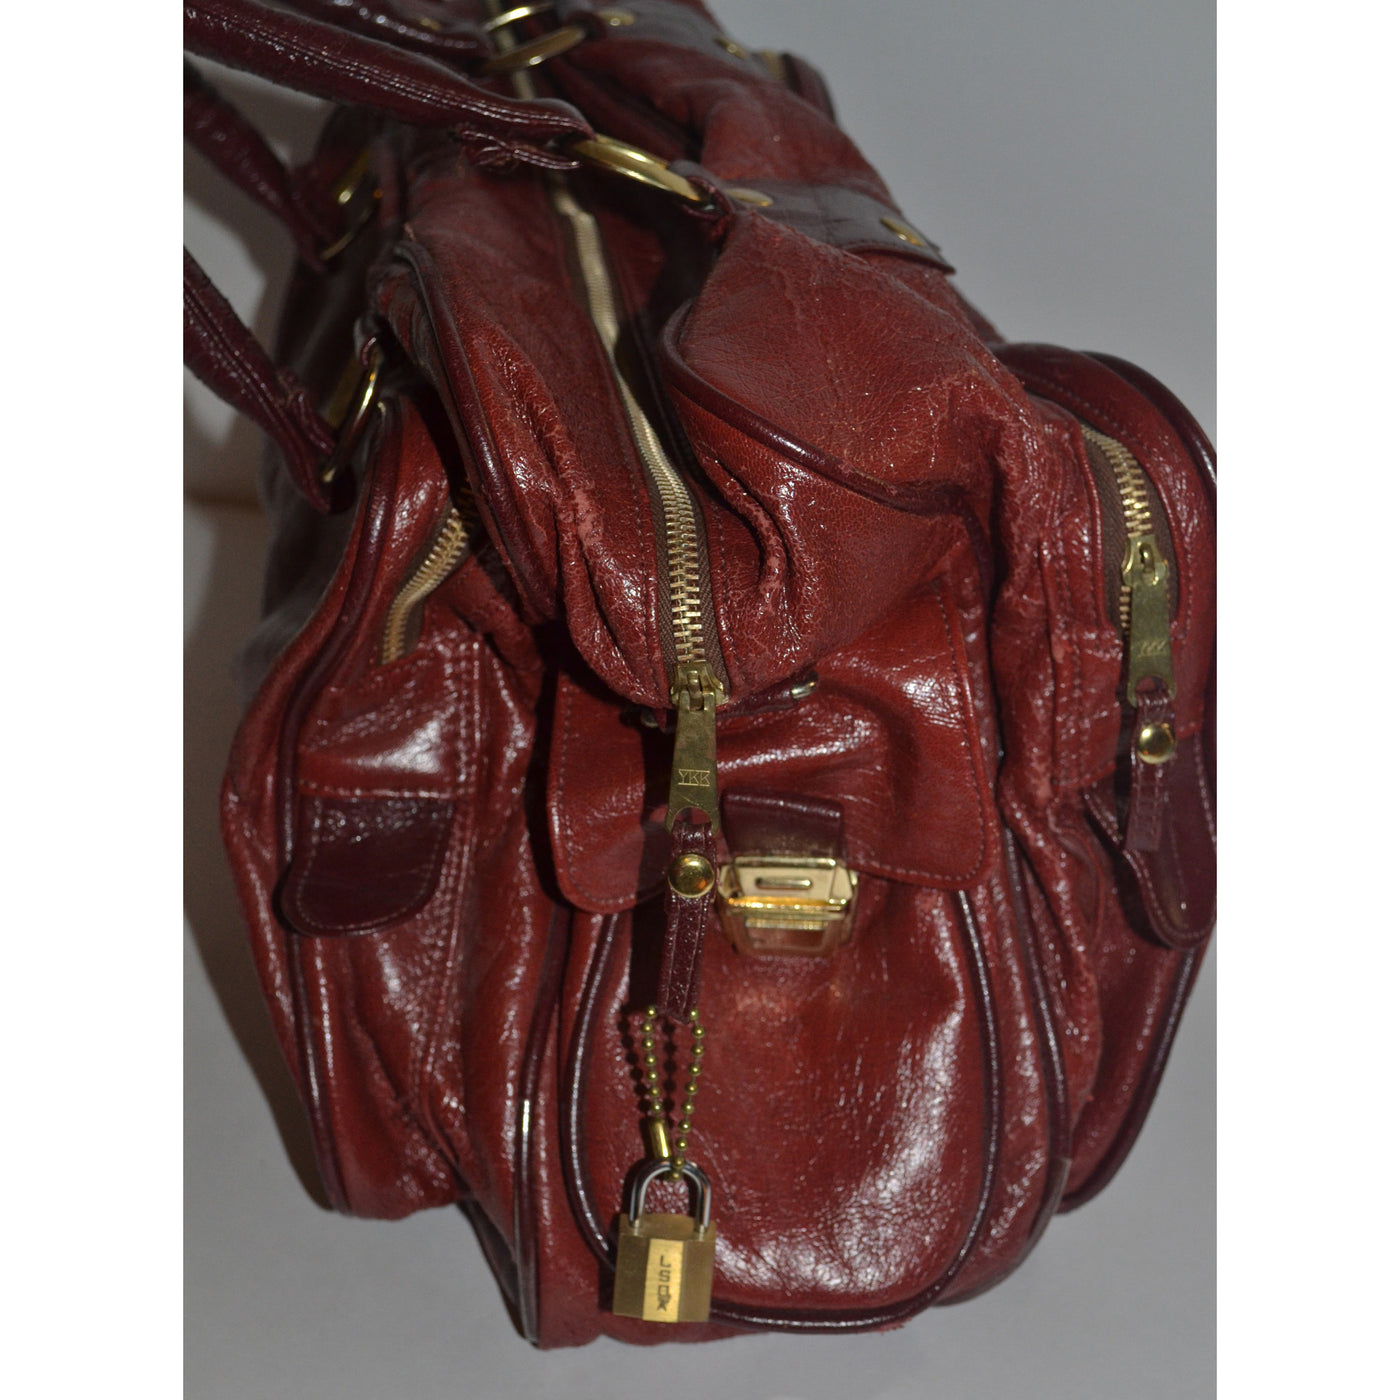 Vintage Burgundy Travel Bag By Monarch Luggage 